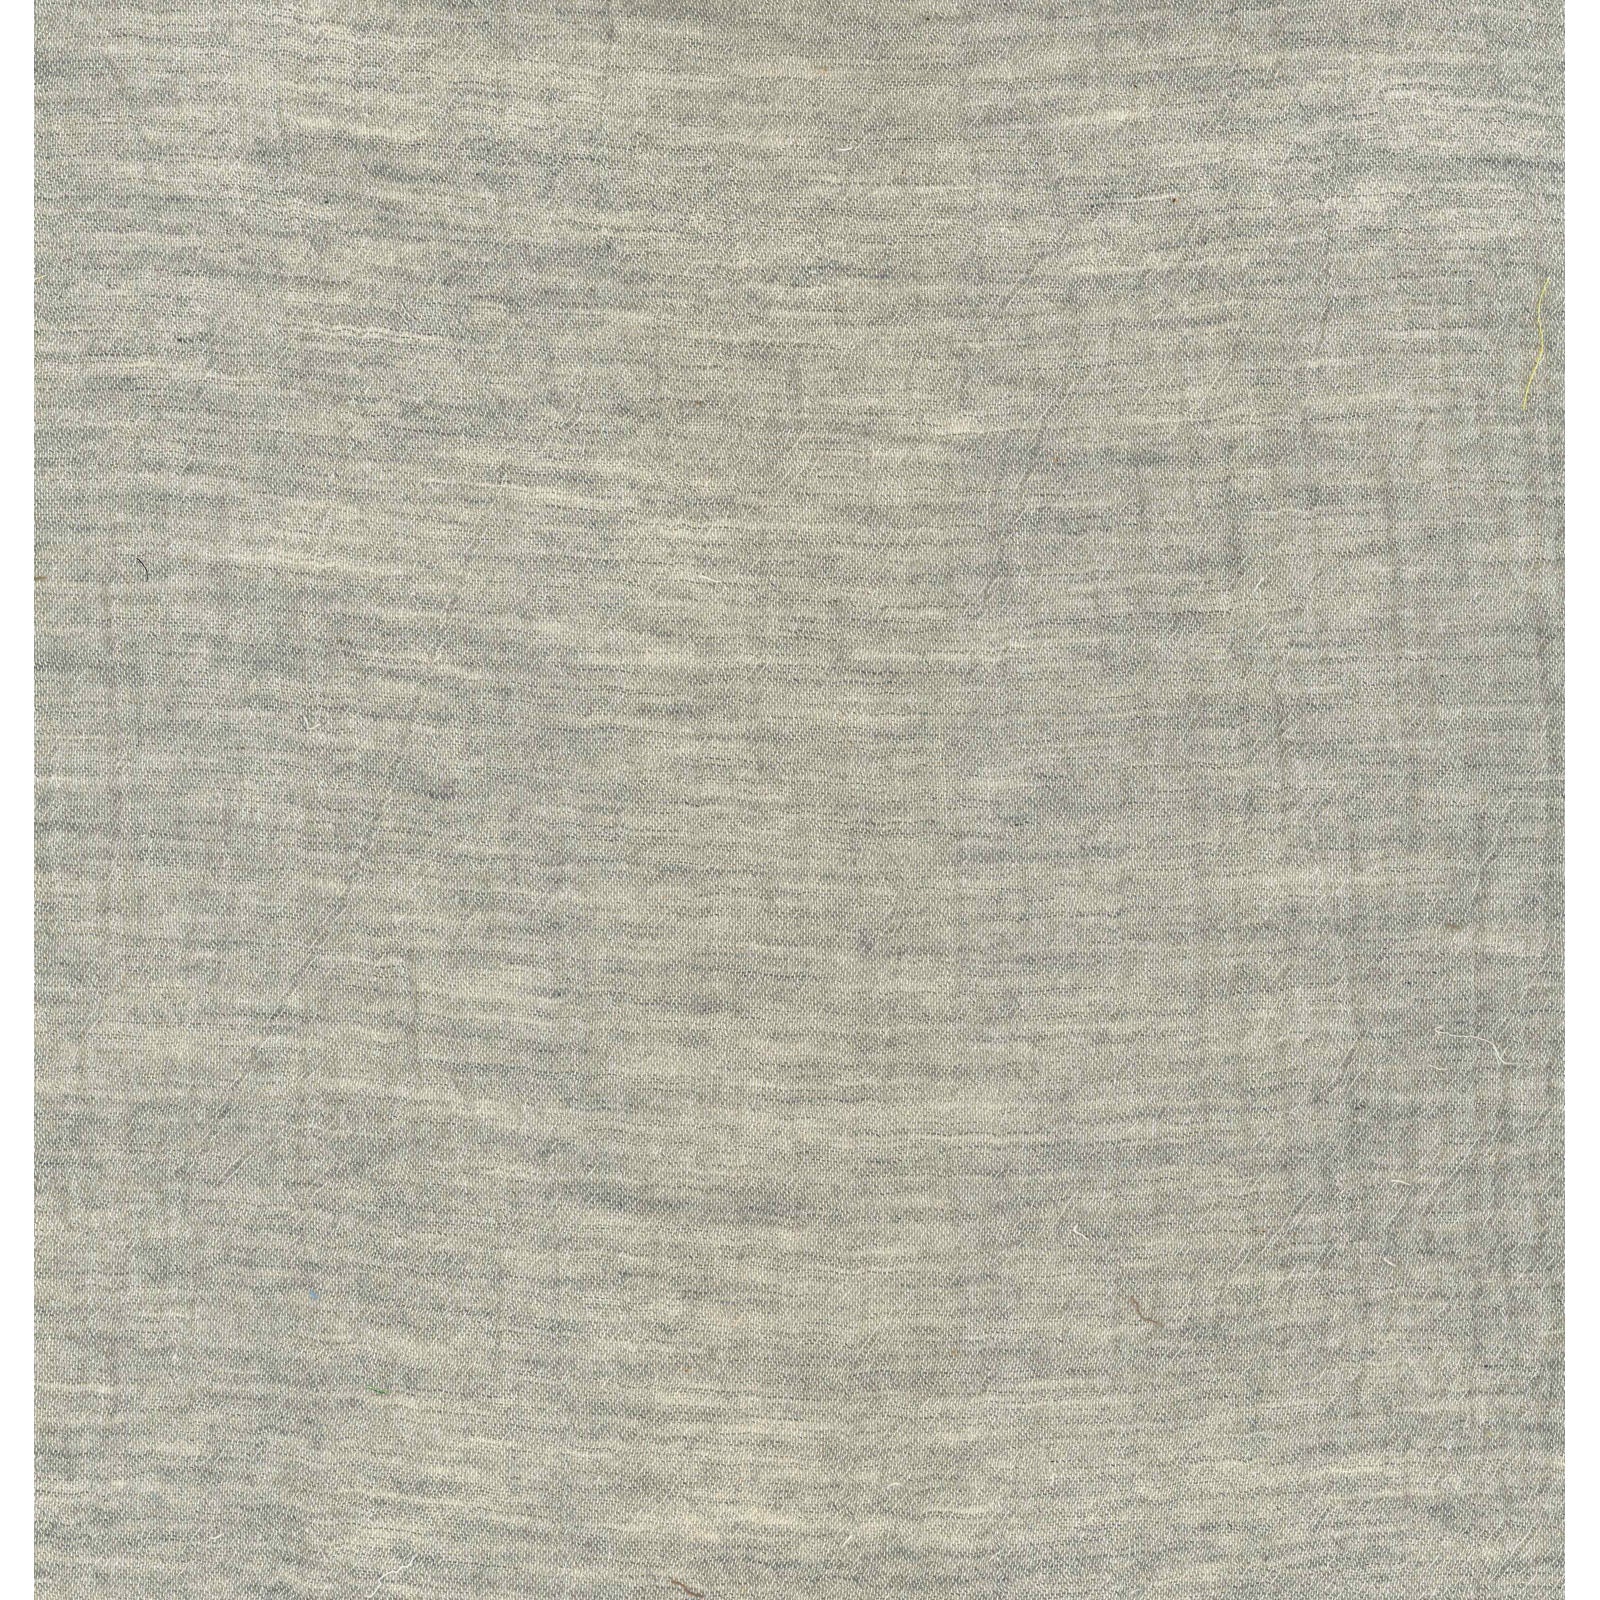 Solid Plain Gray | Double Gauze